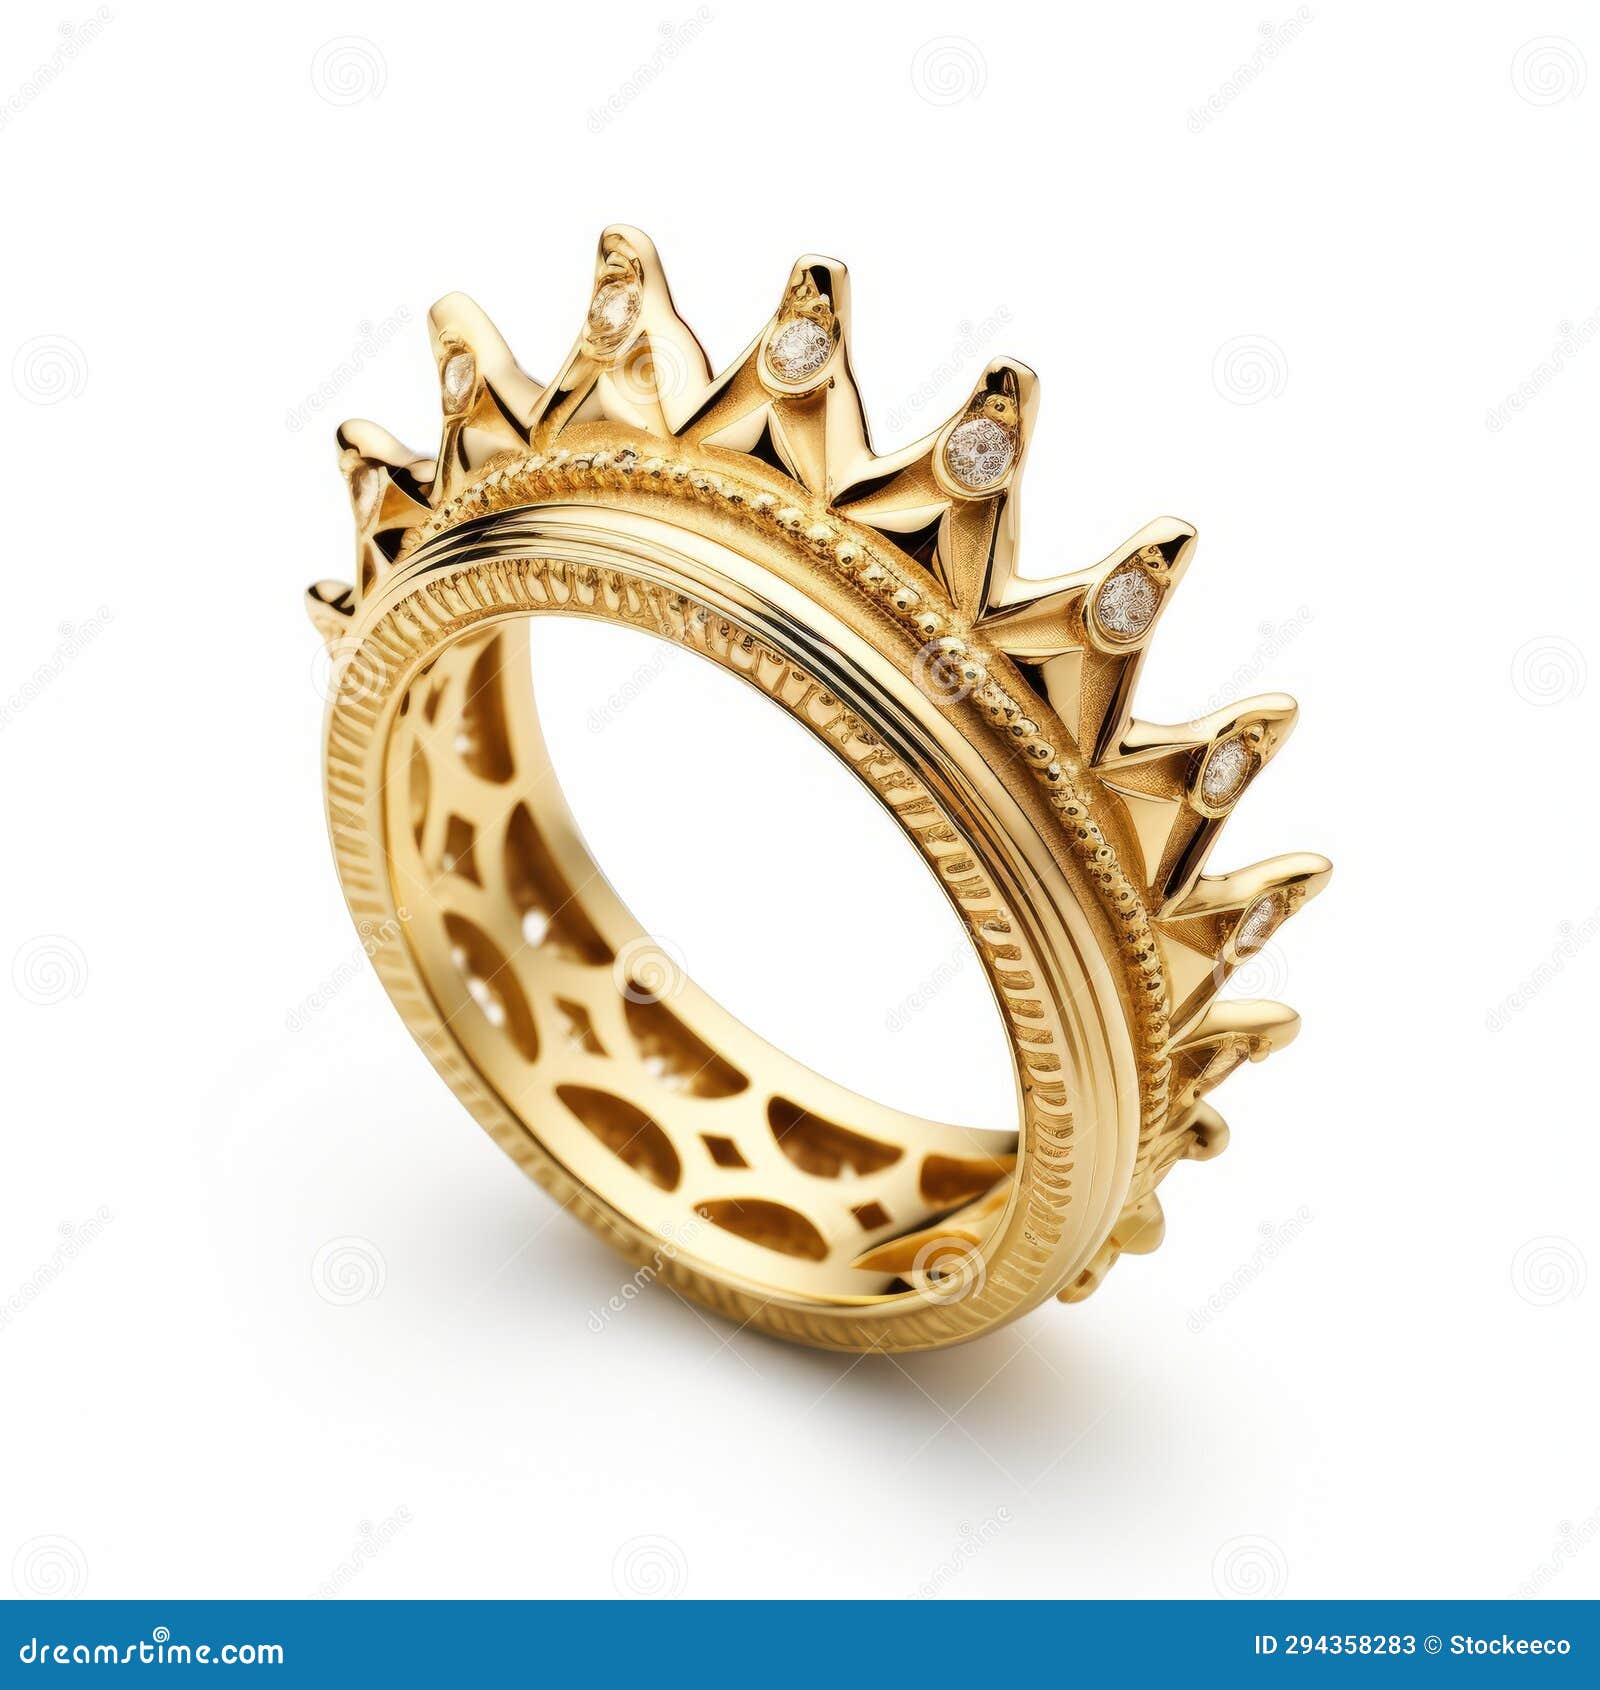 14kt Yellow Gold Crown/Tiara Diamond Ring – Touchstone Jewelers